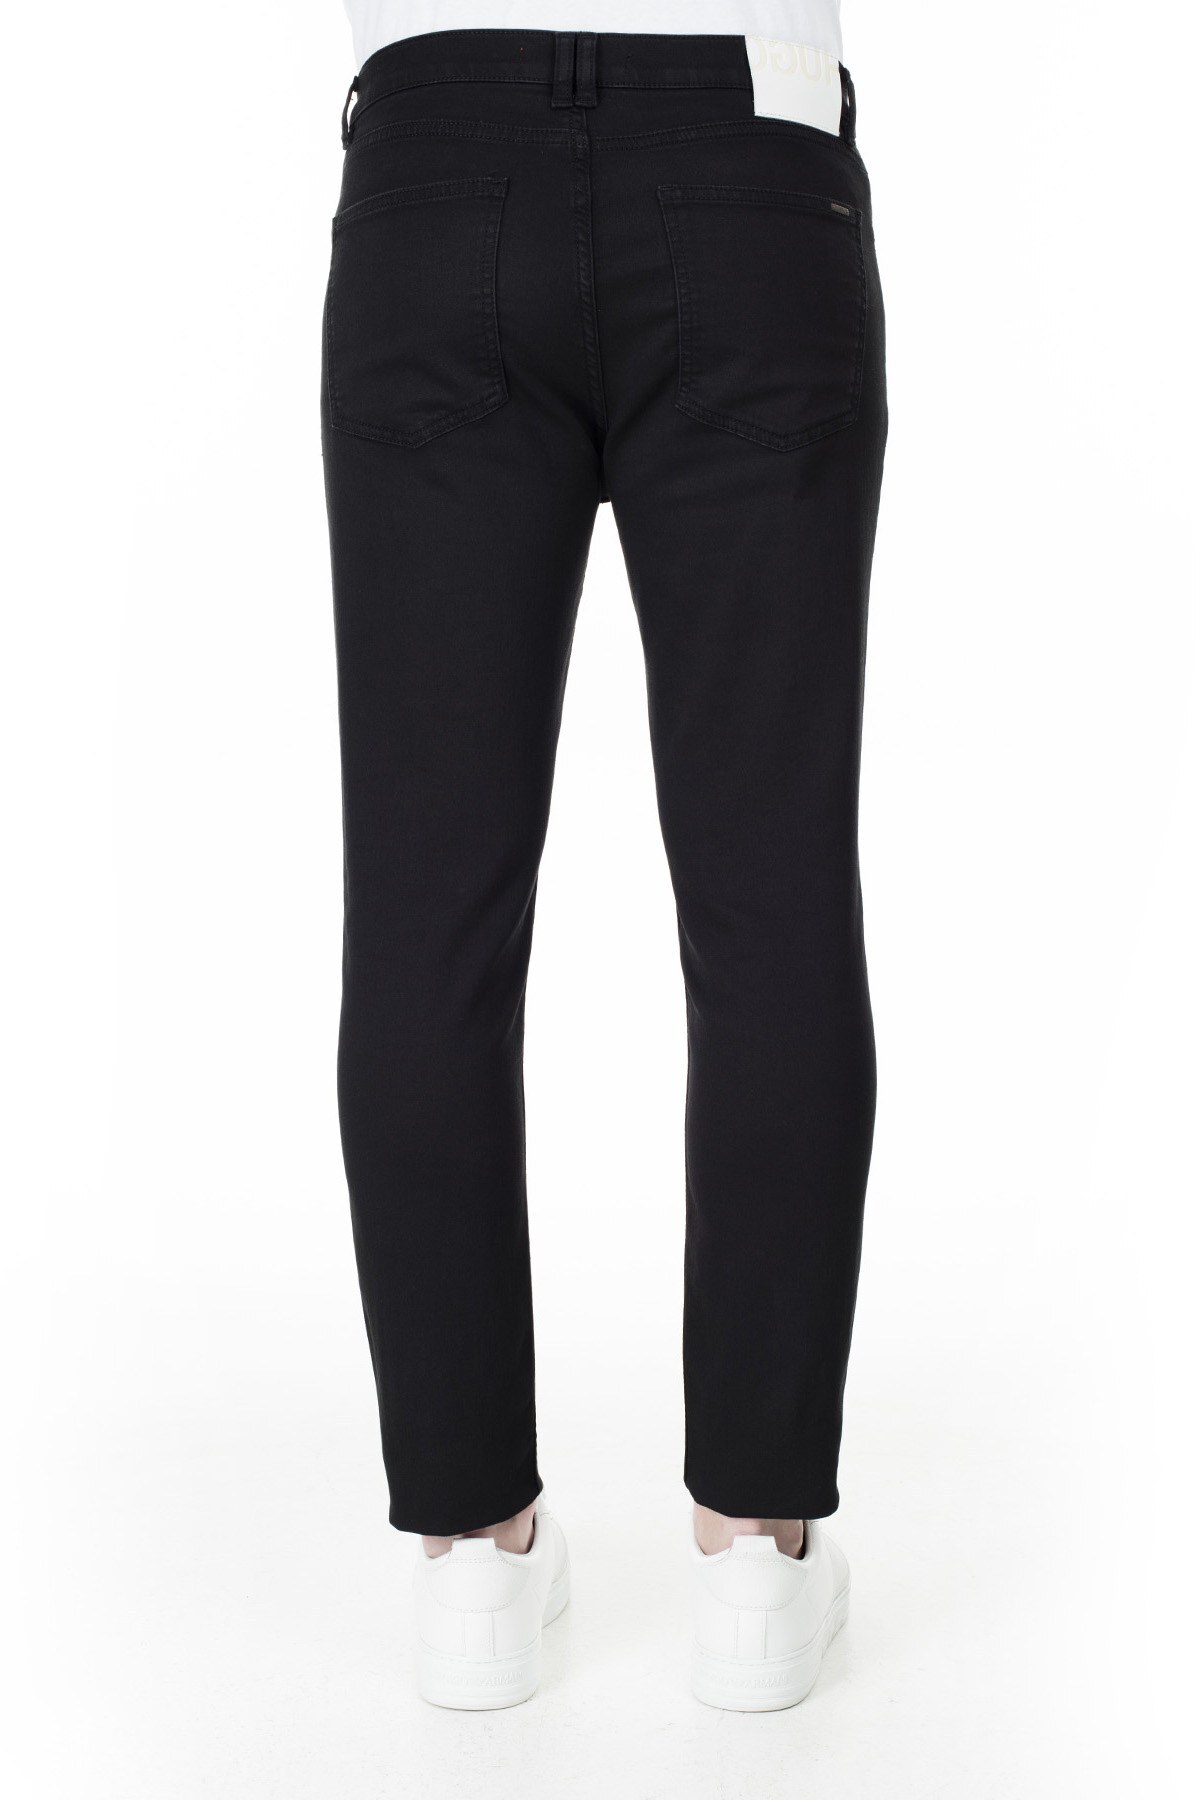 Hugo Boss Slim Fit Jeans Erkek Kot Pantolon 50426695 001 SİYAH